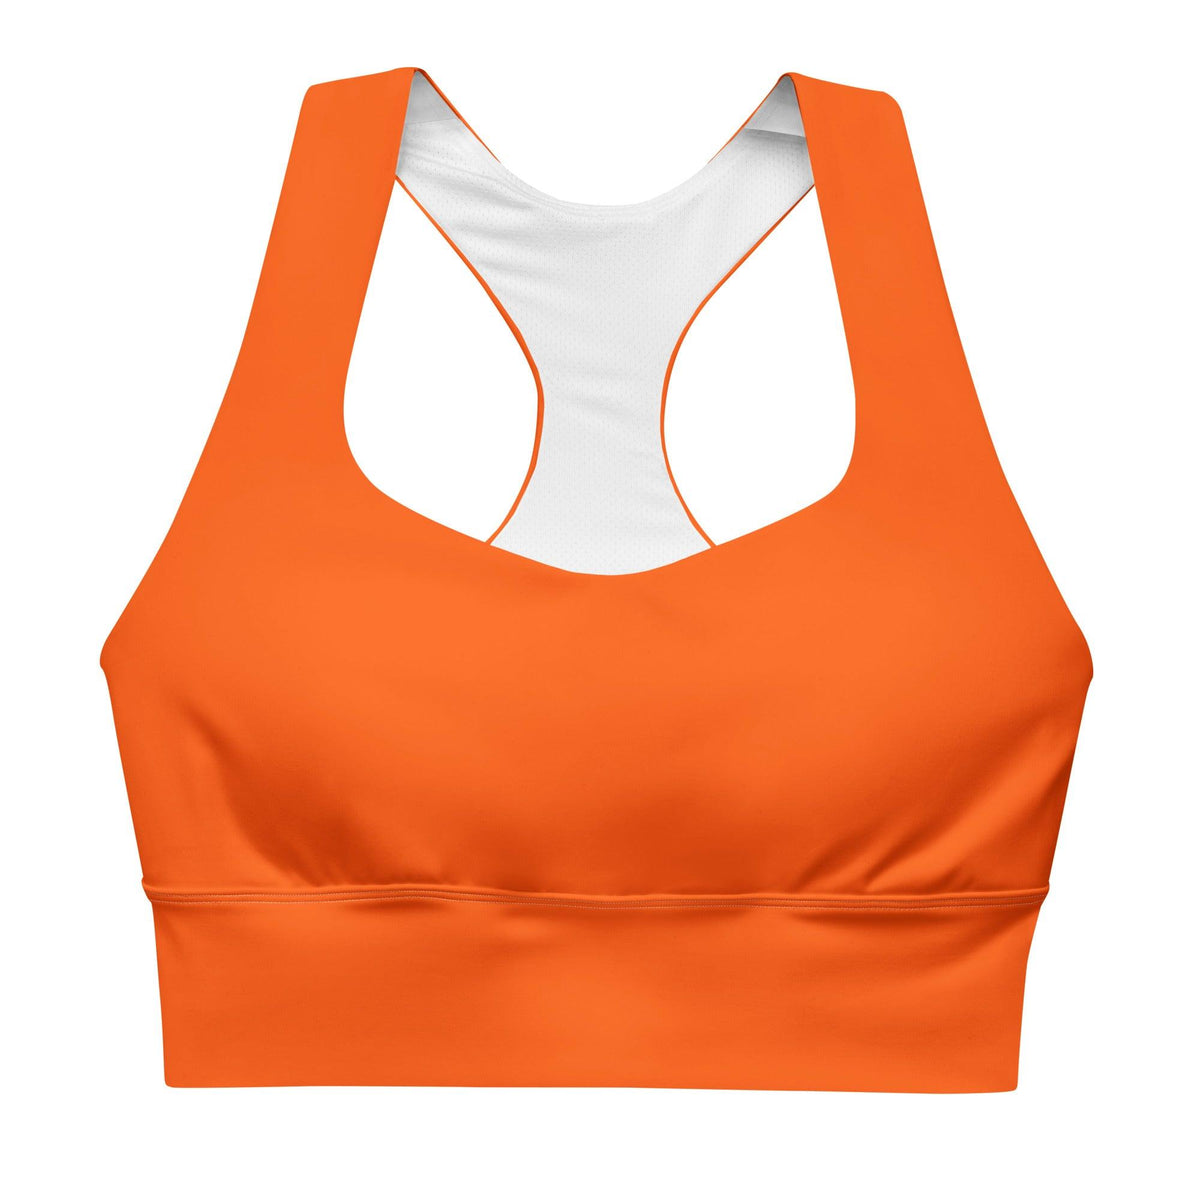 Mandra Bright Orange Longline Sports Bra - Double Layered - Padded - Solid Vibrant